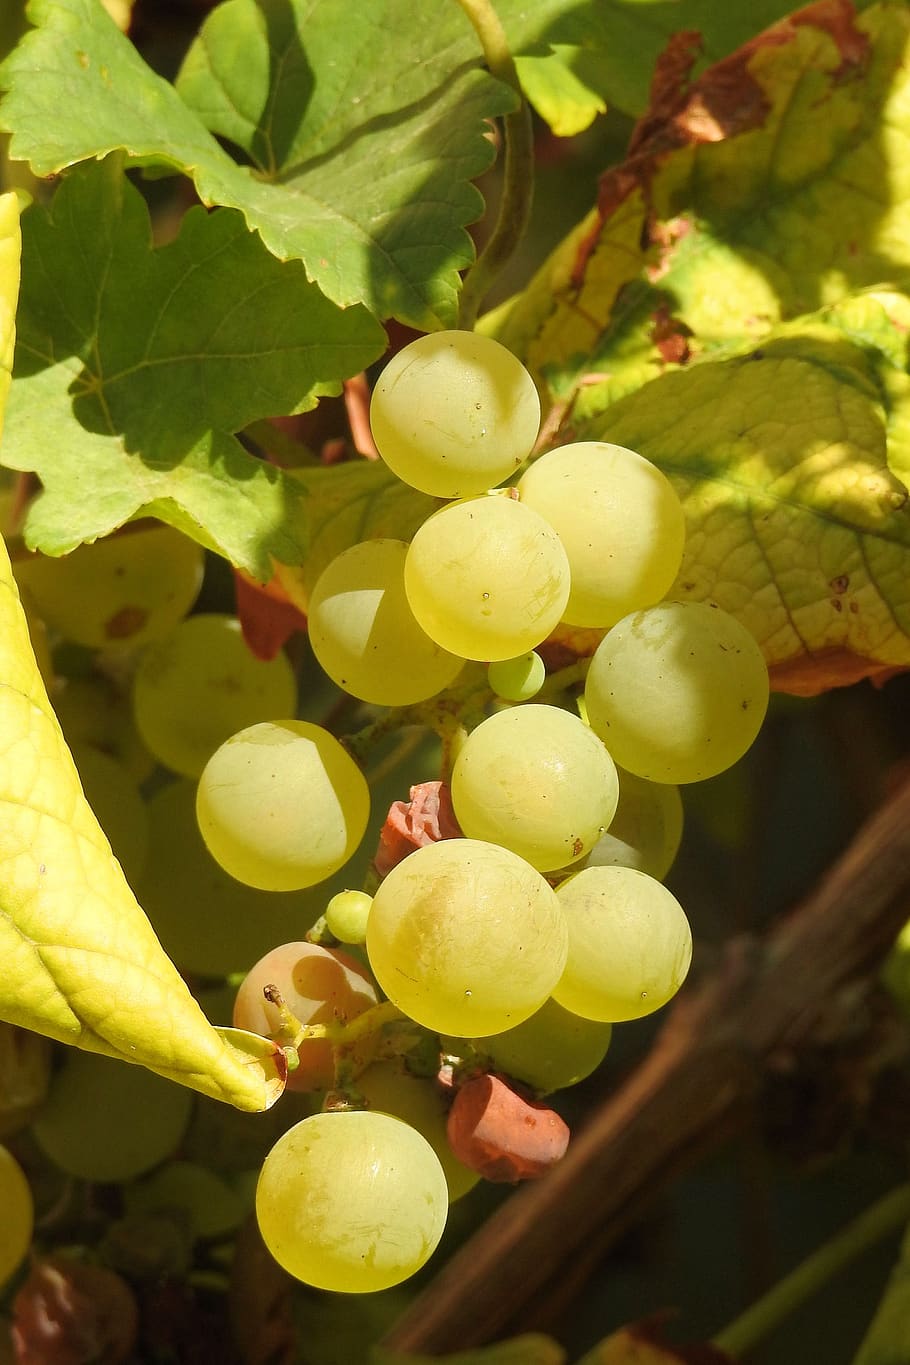 grapes, grapevine, rebstock, green, green grapes, vines stock